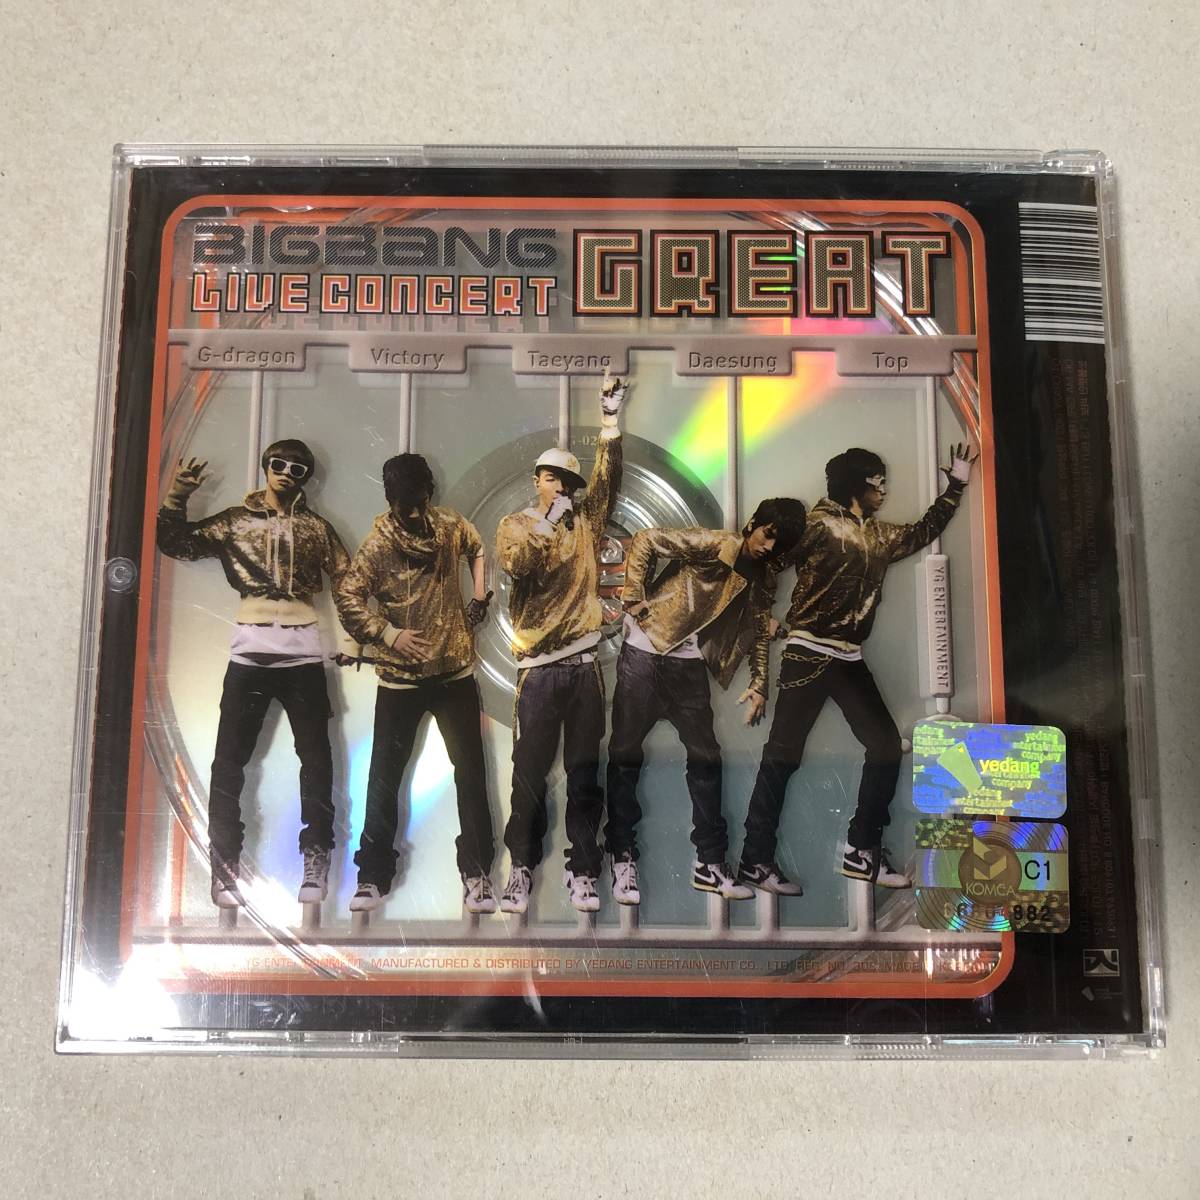 BIGBANG ビッグバン Live Concert Vol.2 CD G-DRAGON TOP SOL D-LITE V.I 韓国 アイドル ポップス bgb734_画像3